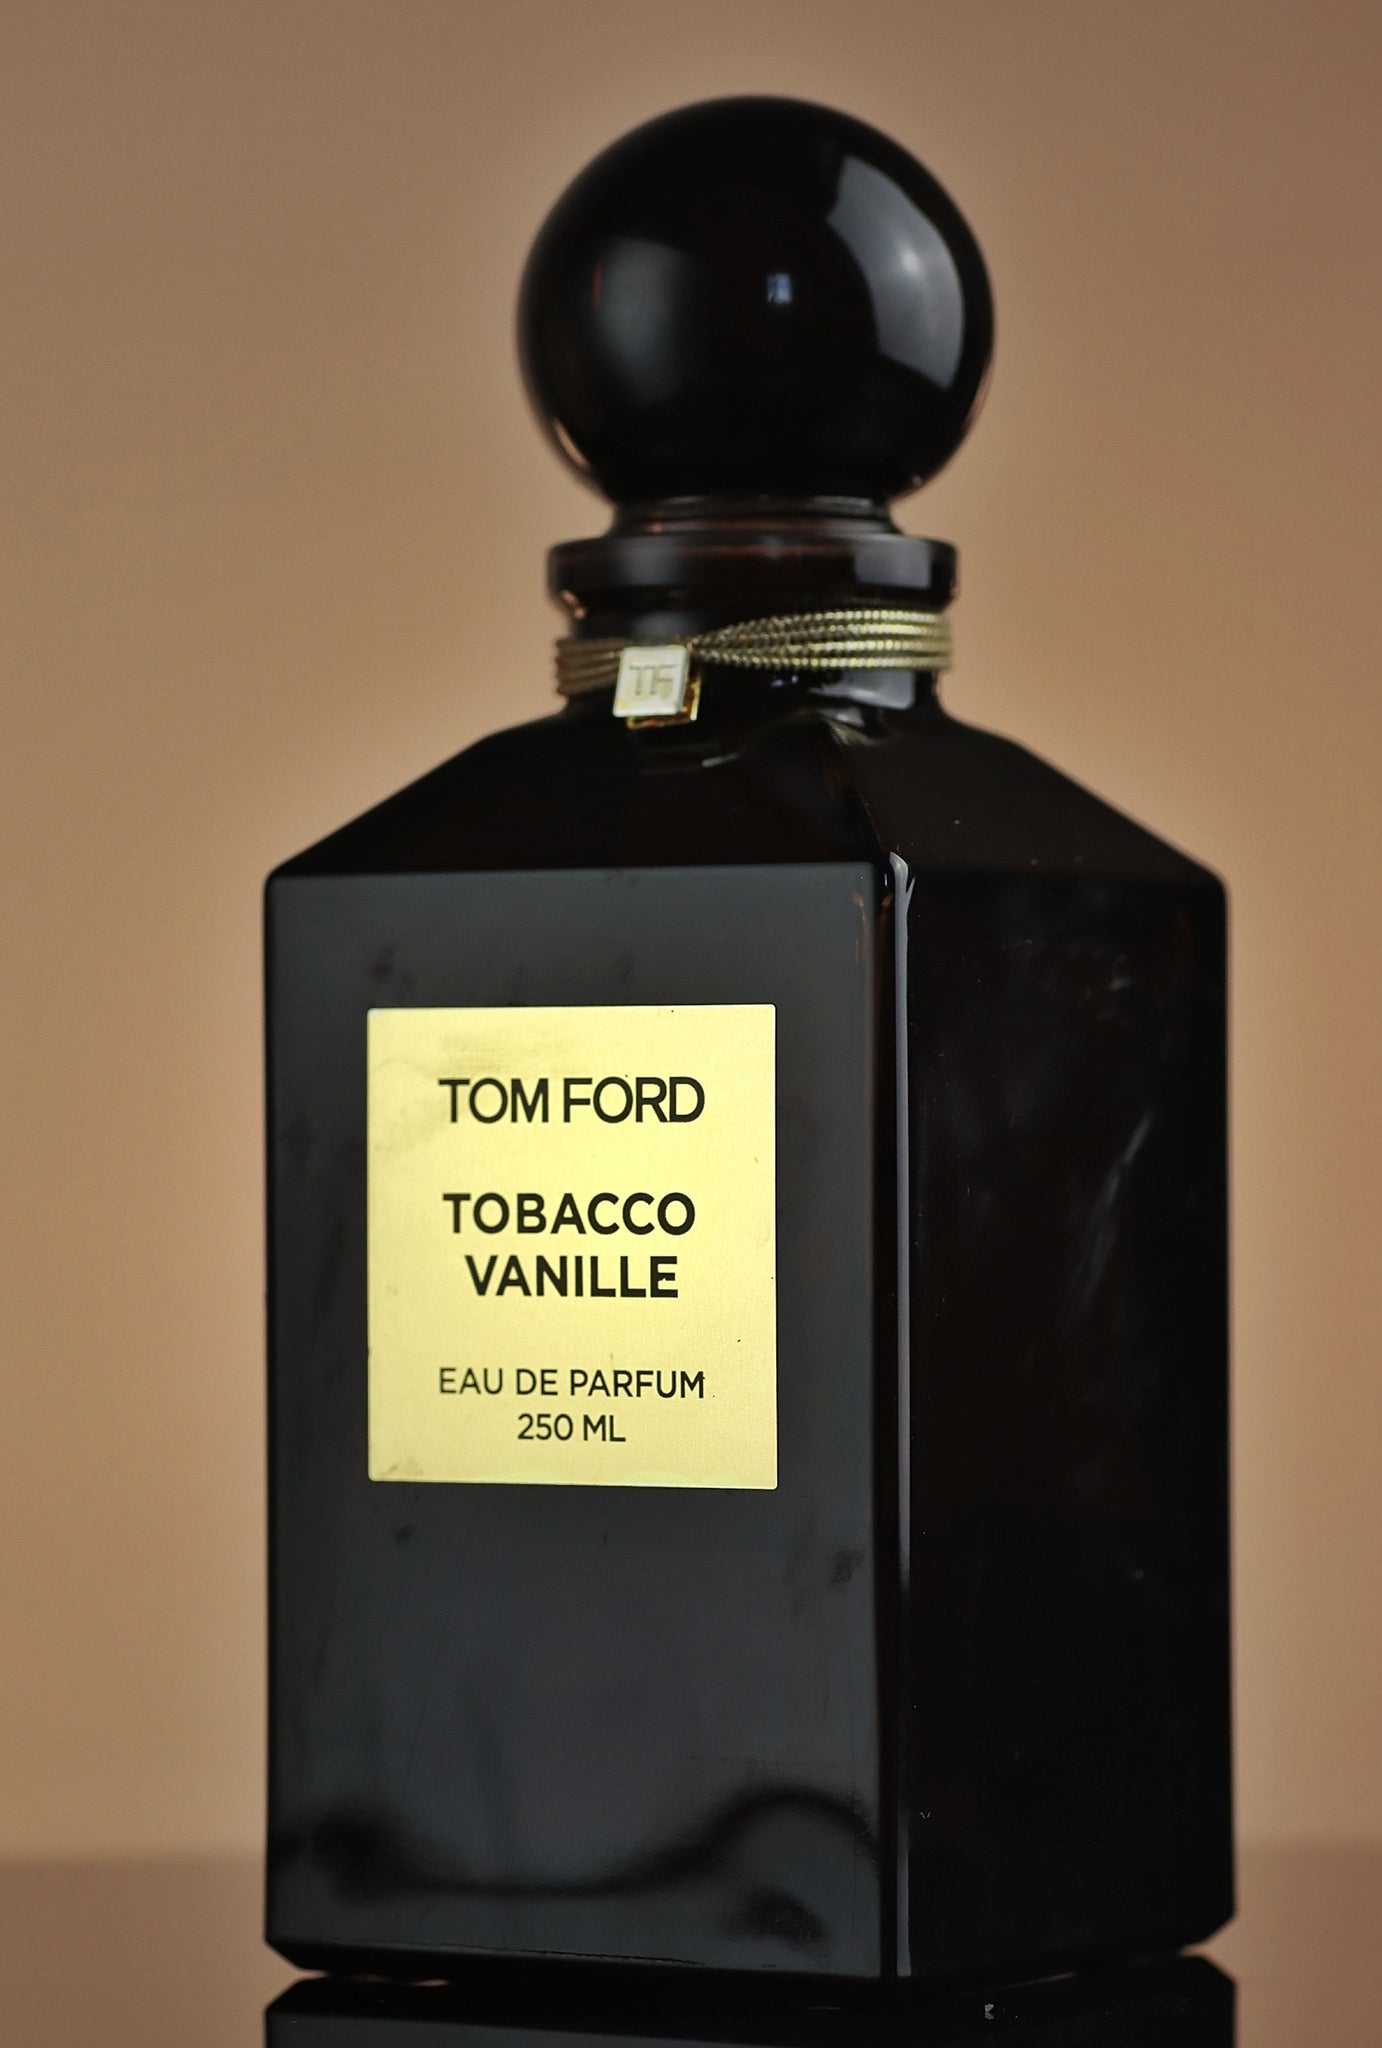 Tom Ford Tobacco Vanille, Fragrance Sample, Perfume Sample